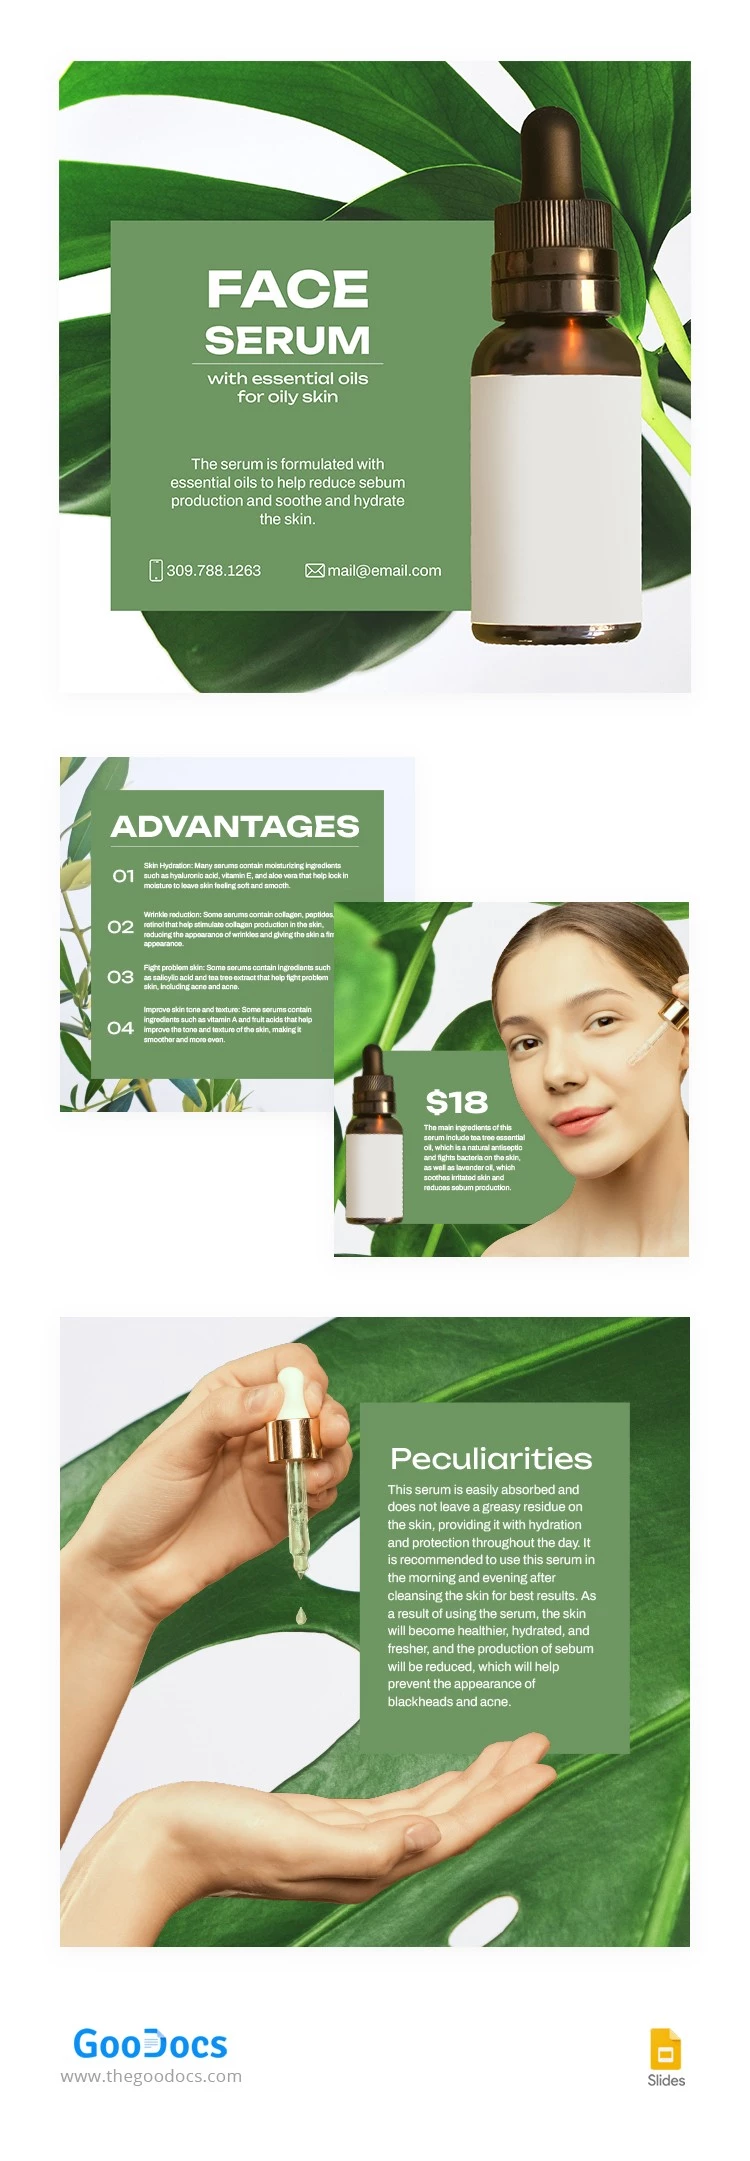 Productos de Serum Facial Verde en Amazon - free Google Docs Template - 10066106